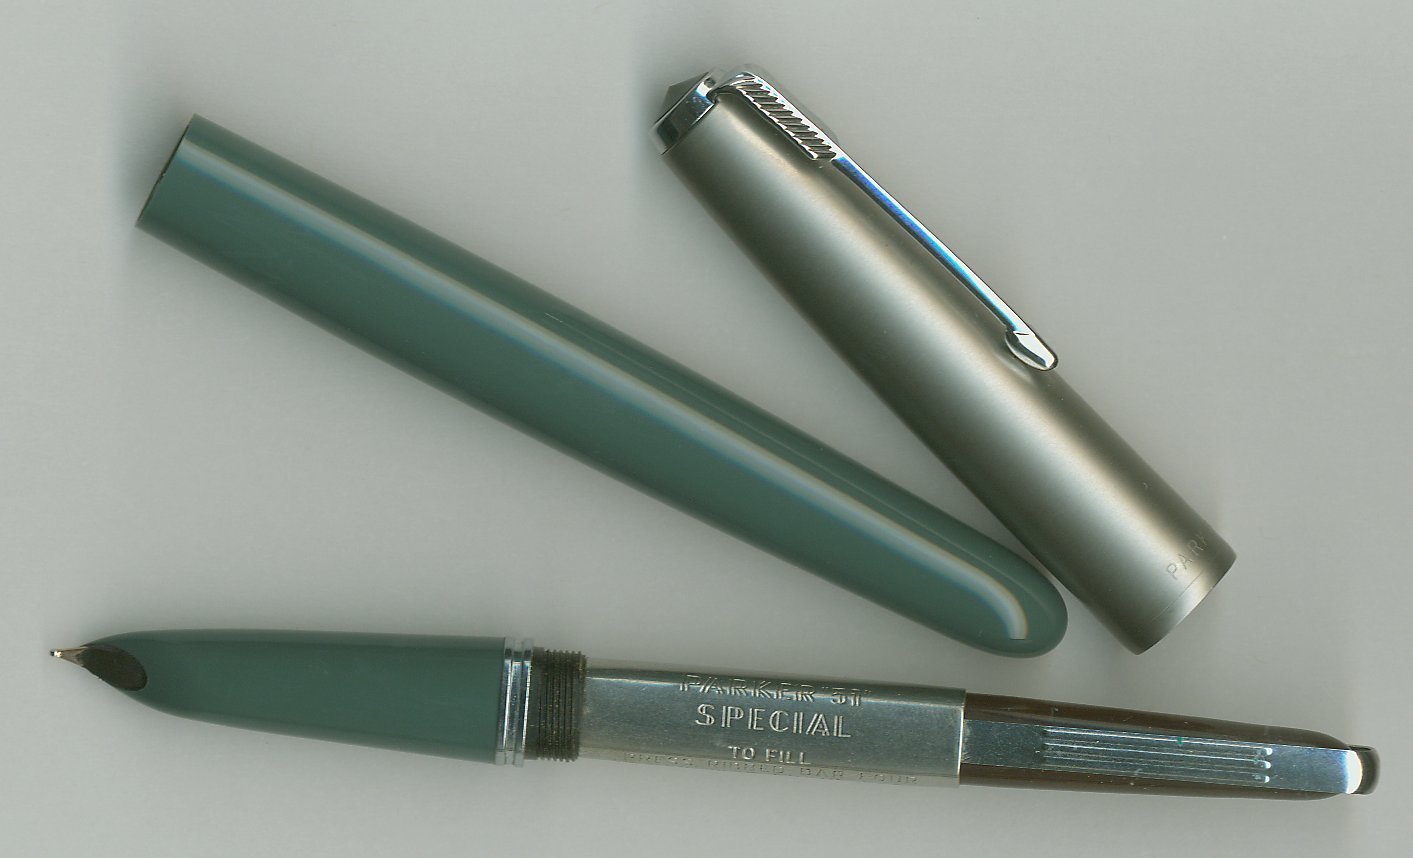 USA Original Parker 51 Aerometric Barrel for Fountain Pen in Navy Grey 